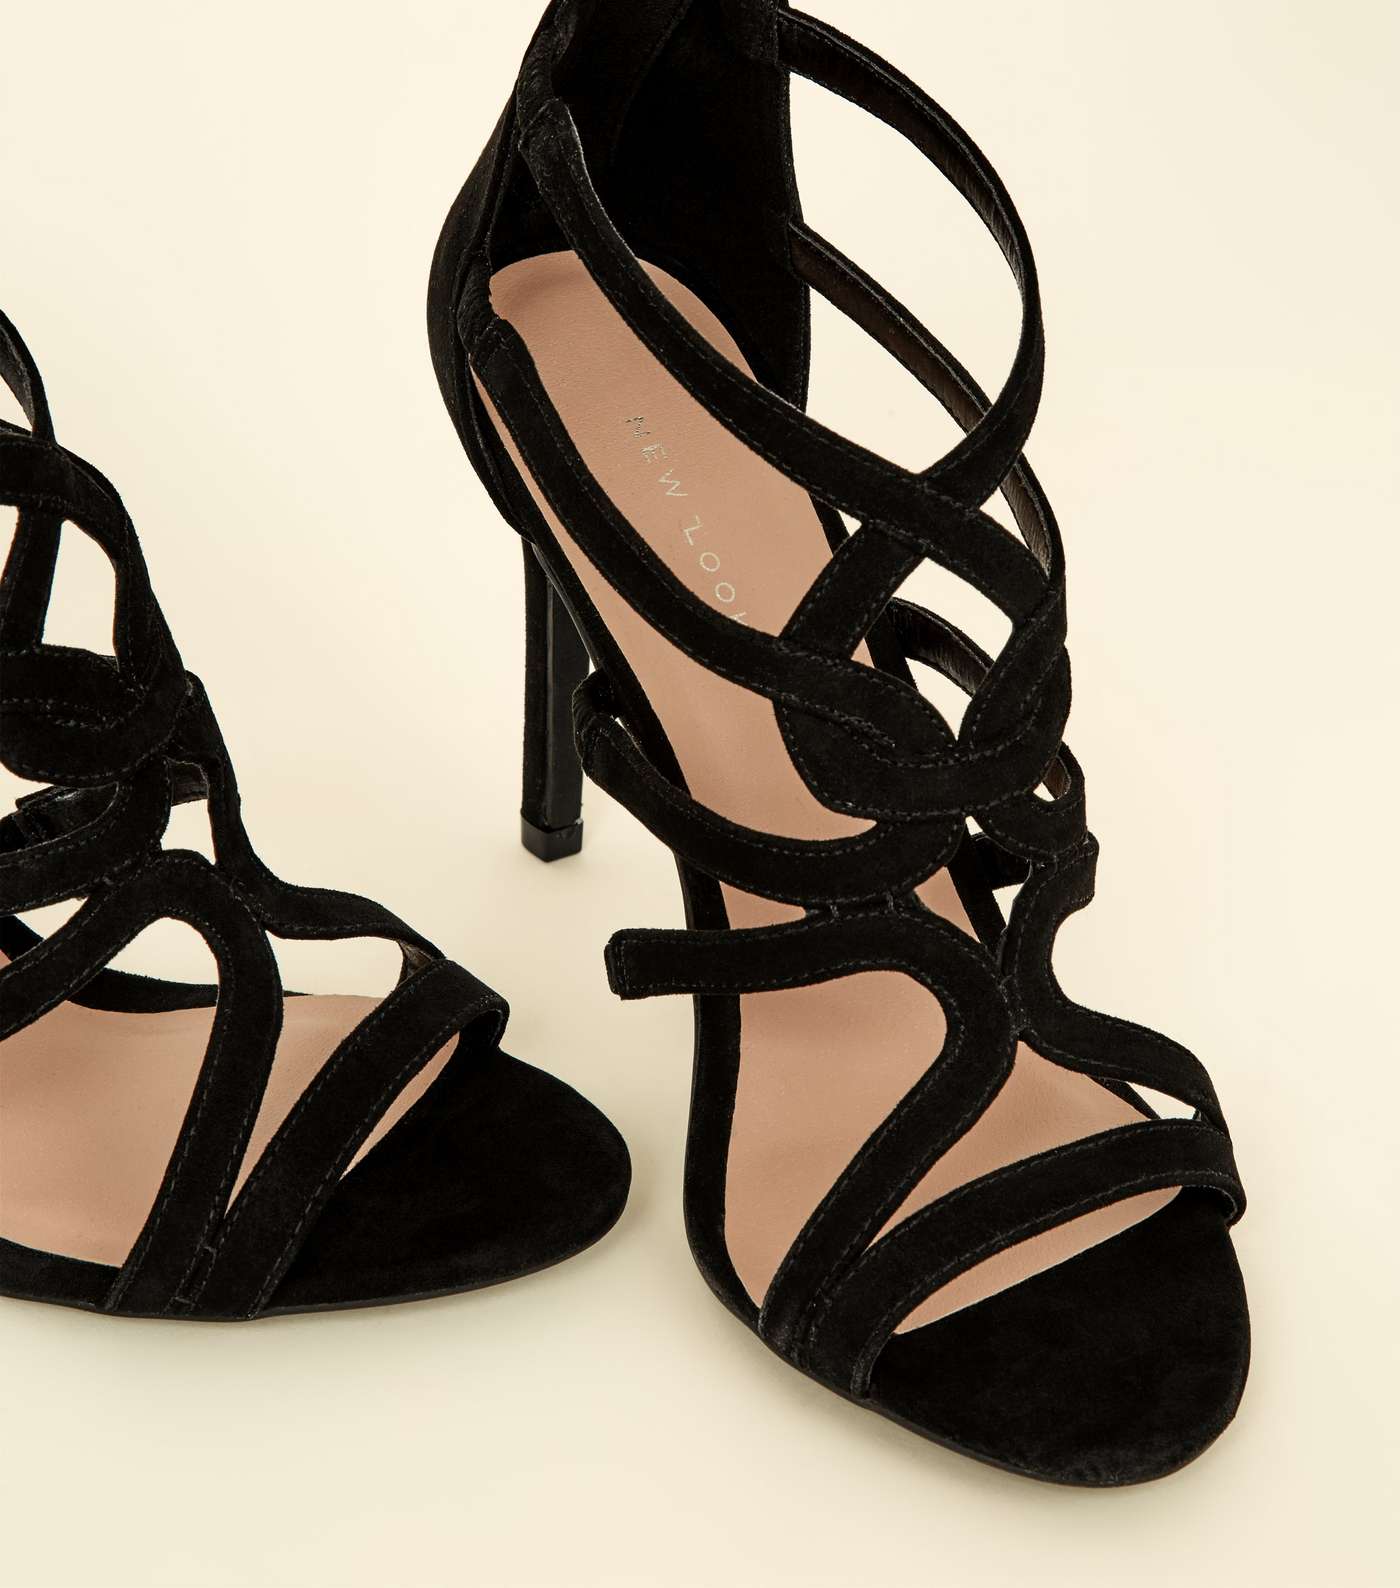 Black Suedette Strappy Stiletto Sandals Image 3